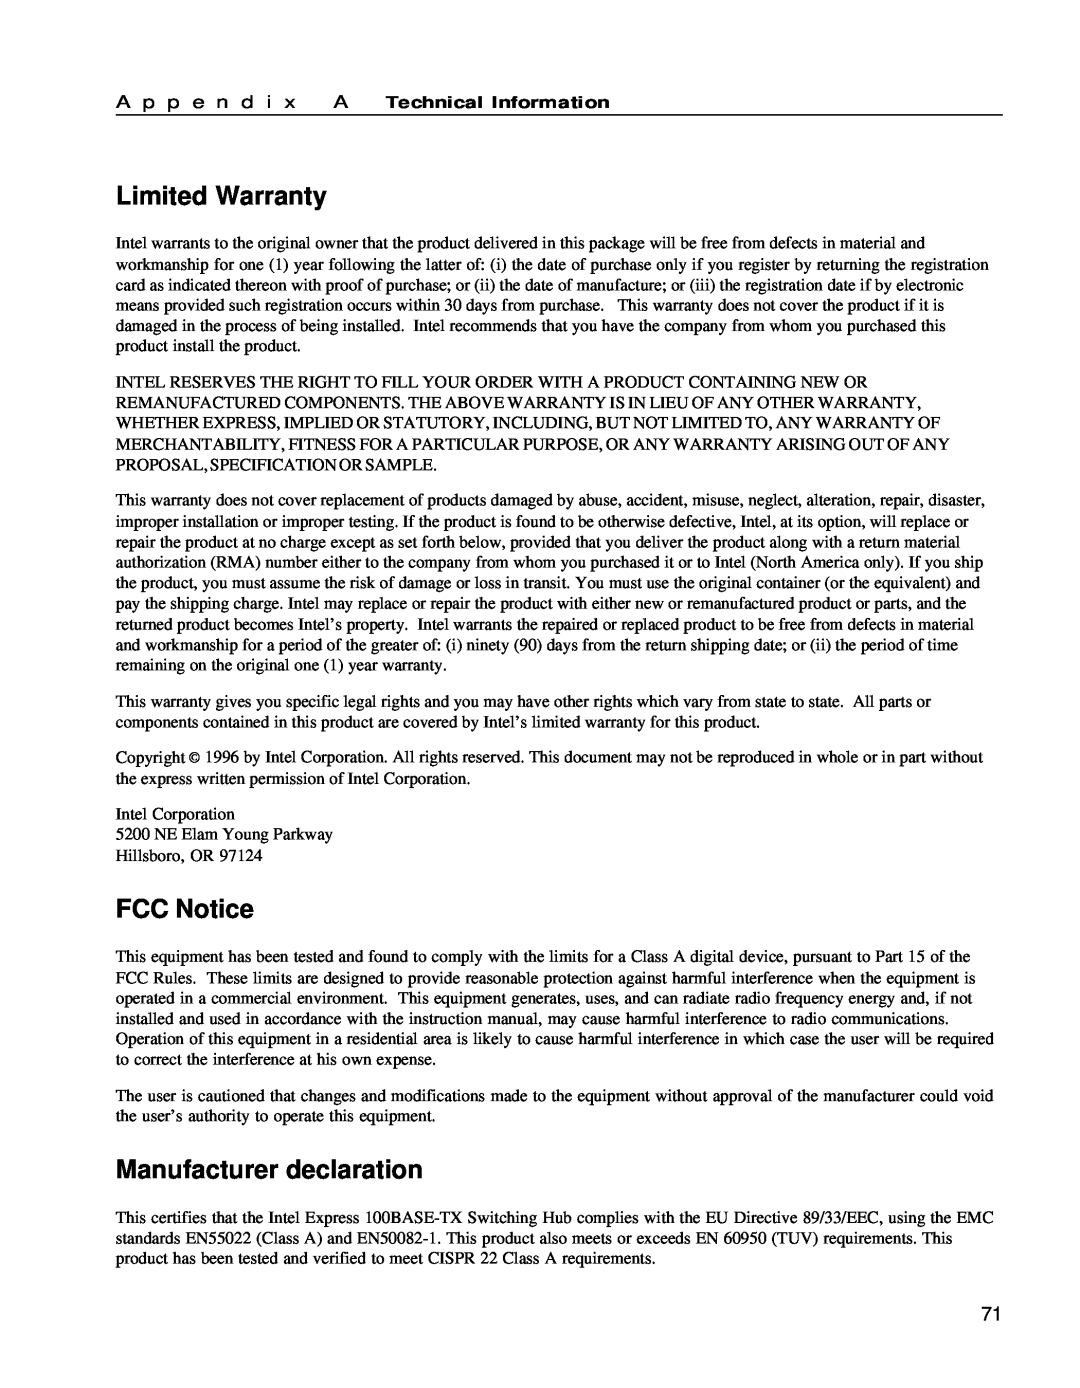 Intel 654655-001 manual Limited Warranty, FCC Notice, Manufacturer declaration, A p p e n d, Technical Information 